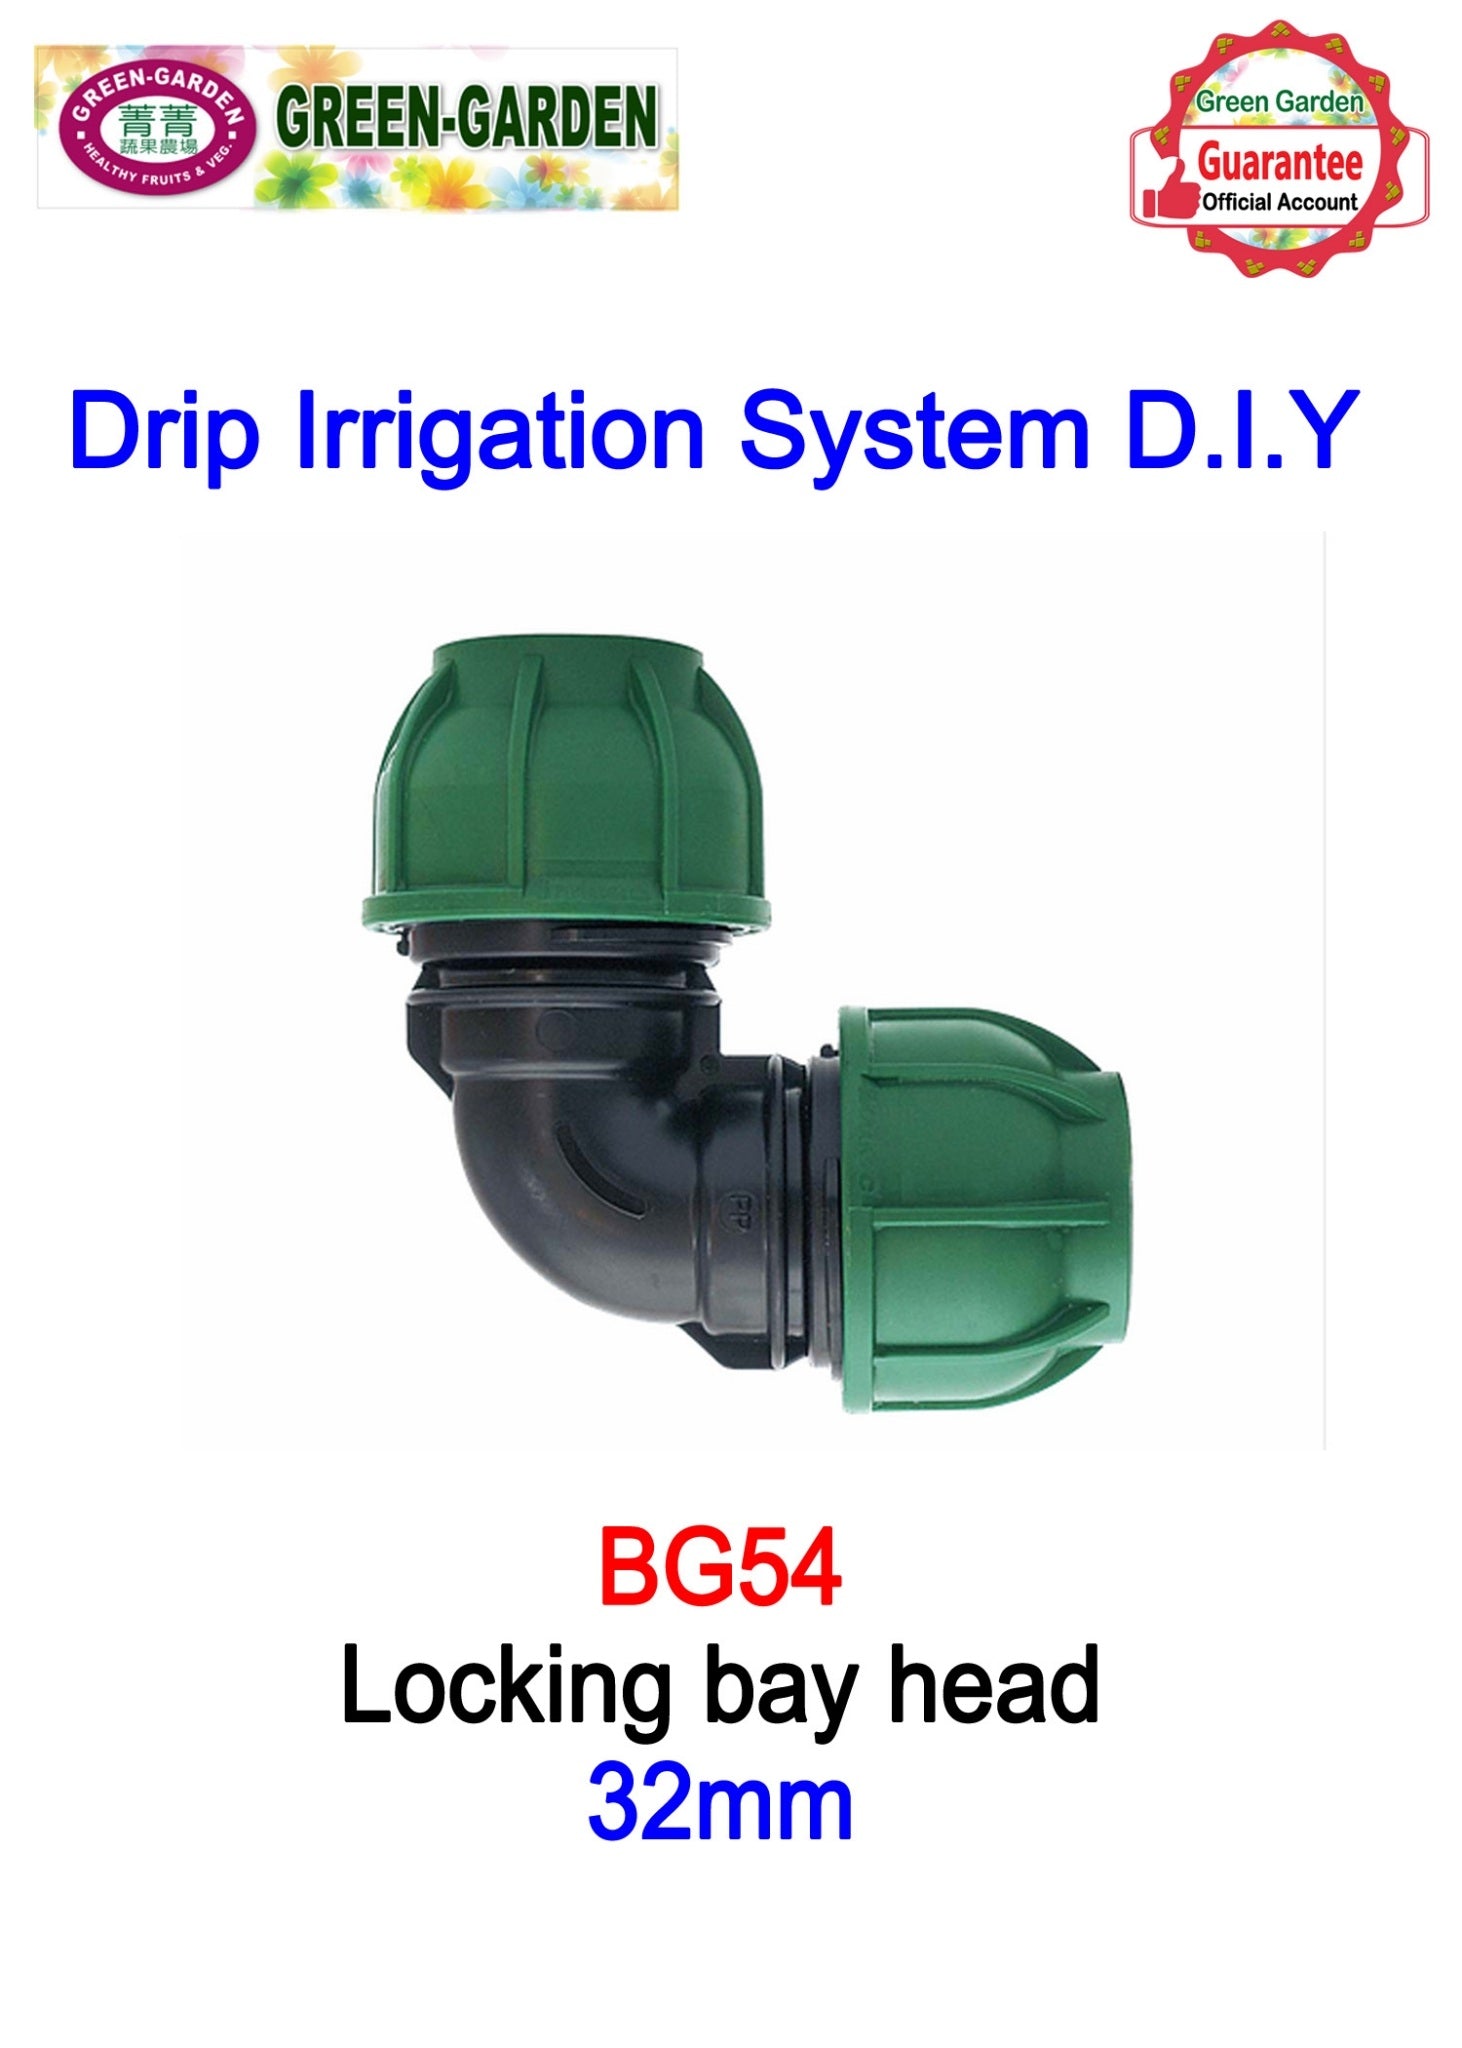 Drip Irrigation System - 32mm locking bay head BG54